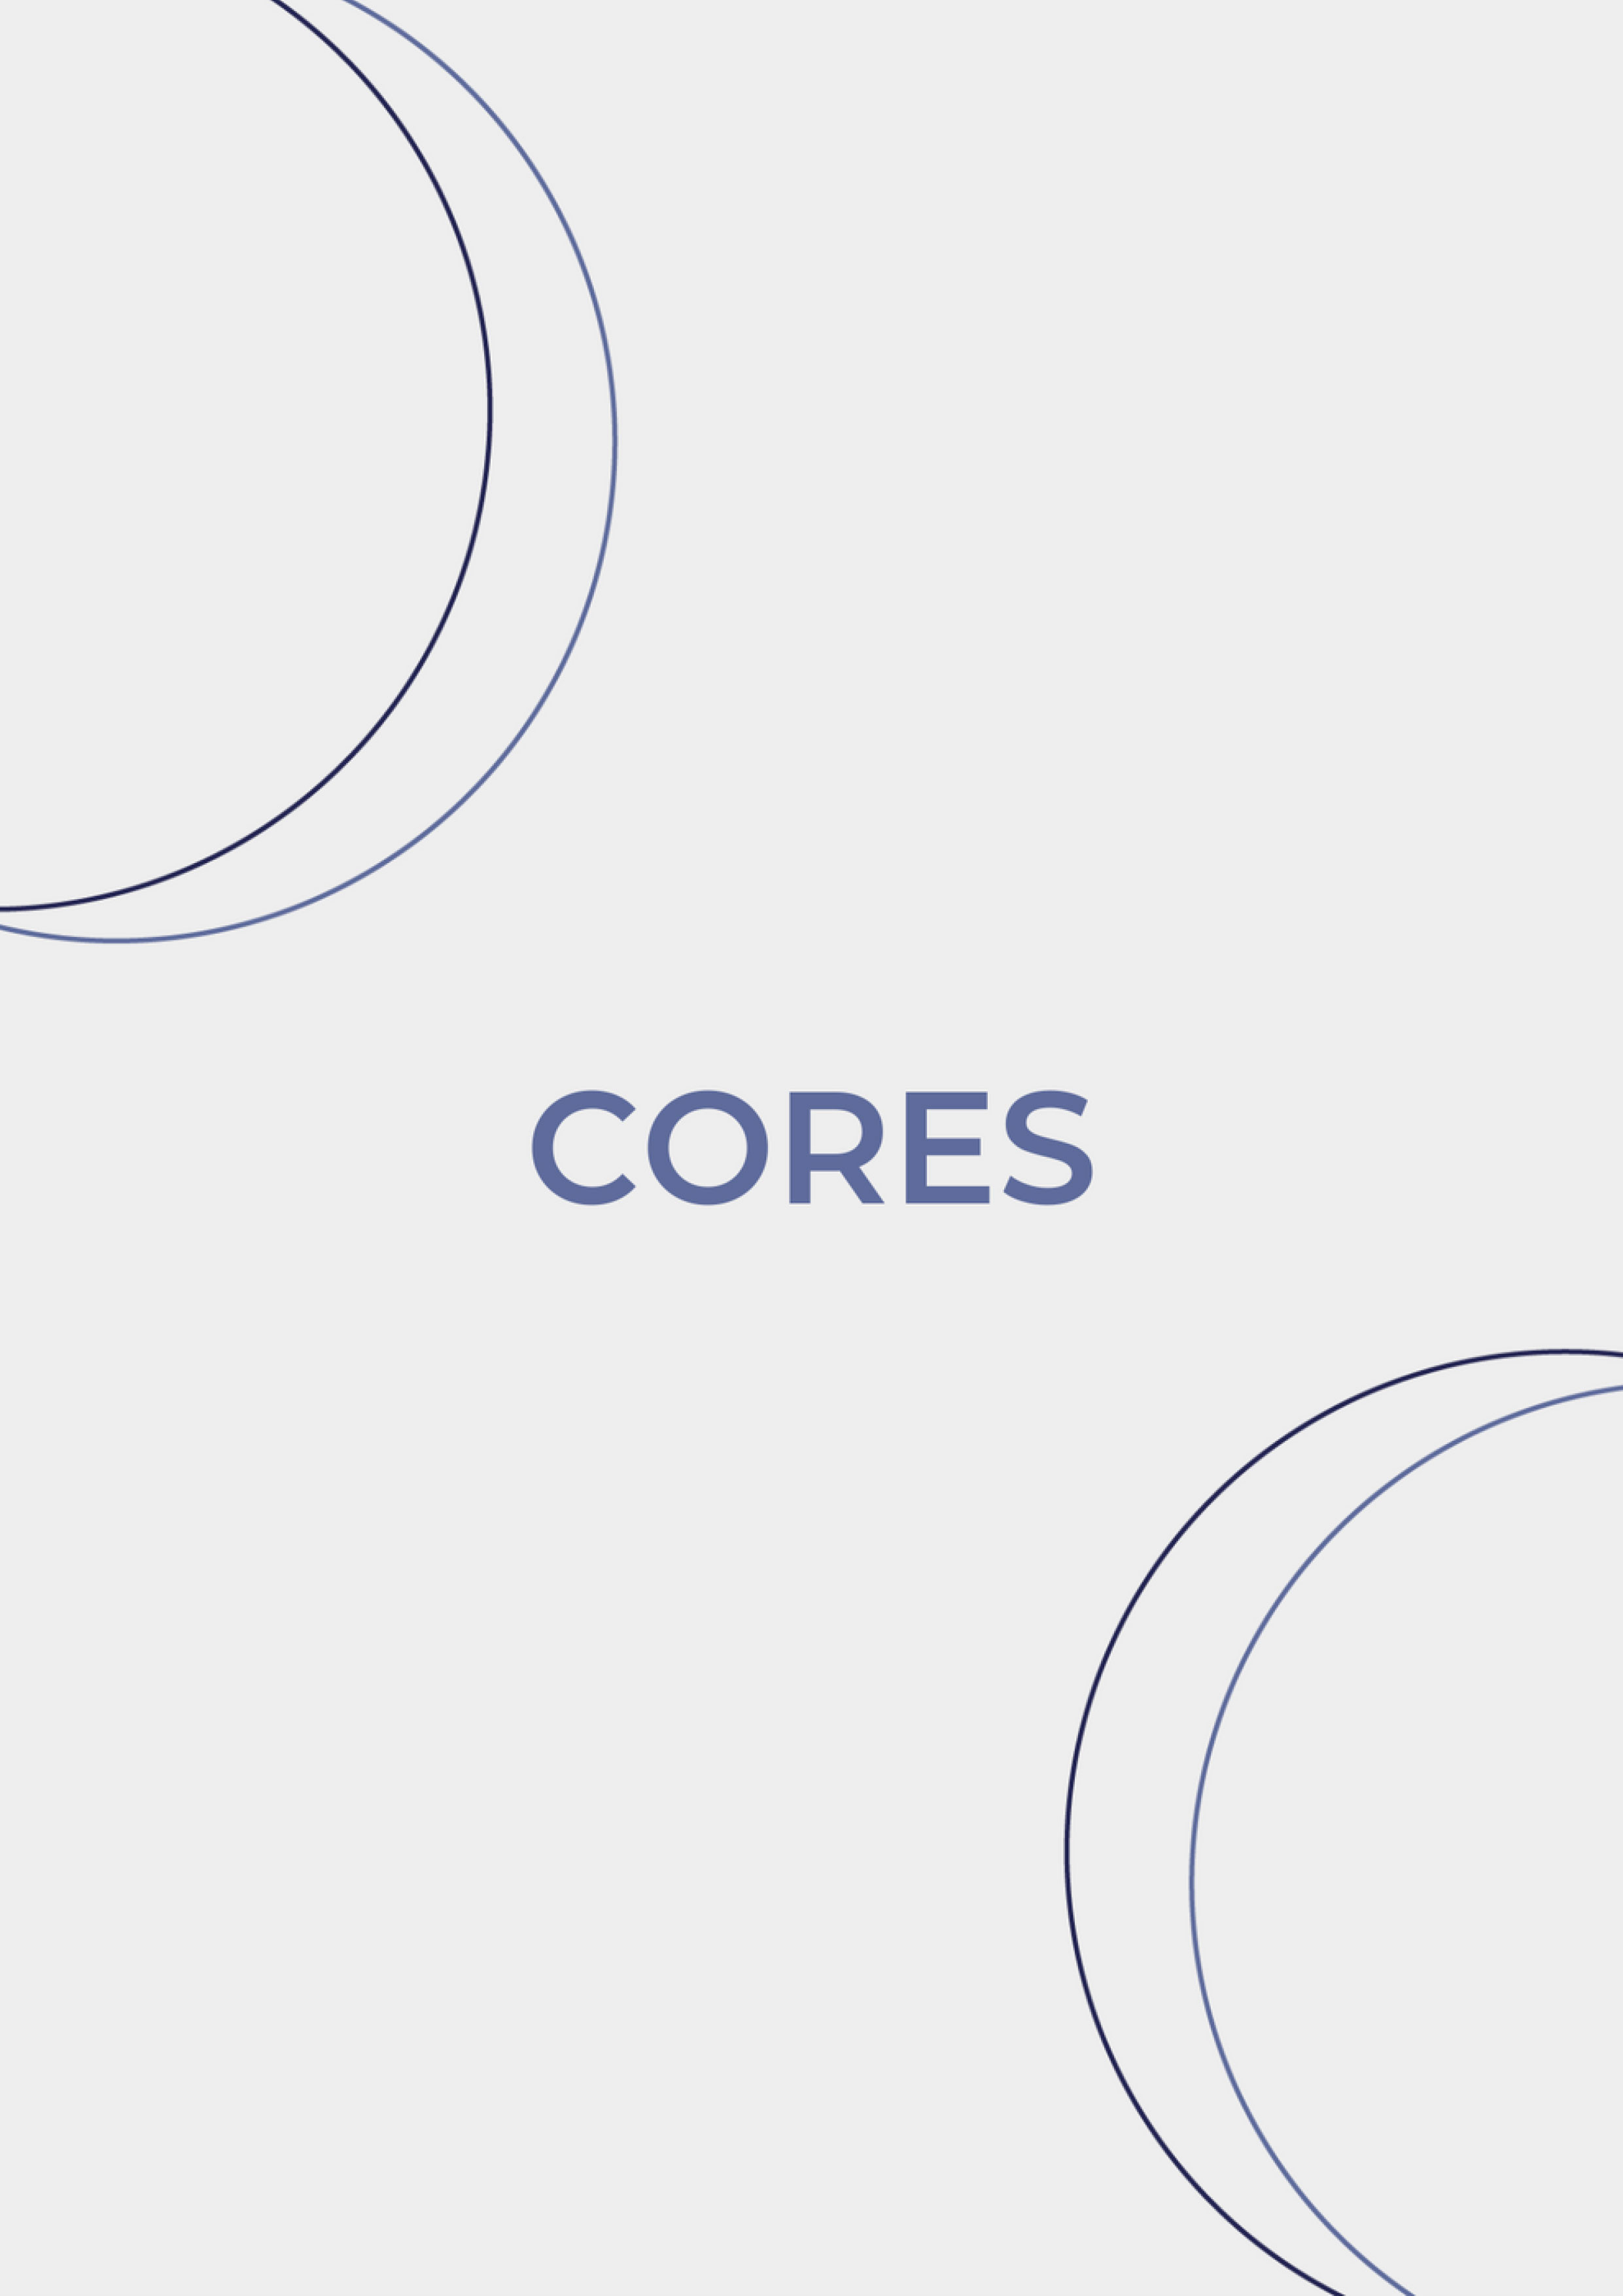 Catálogo Cores